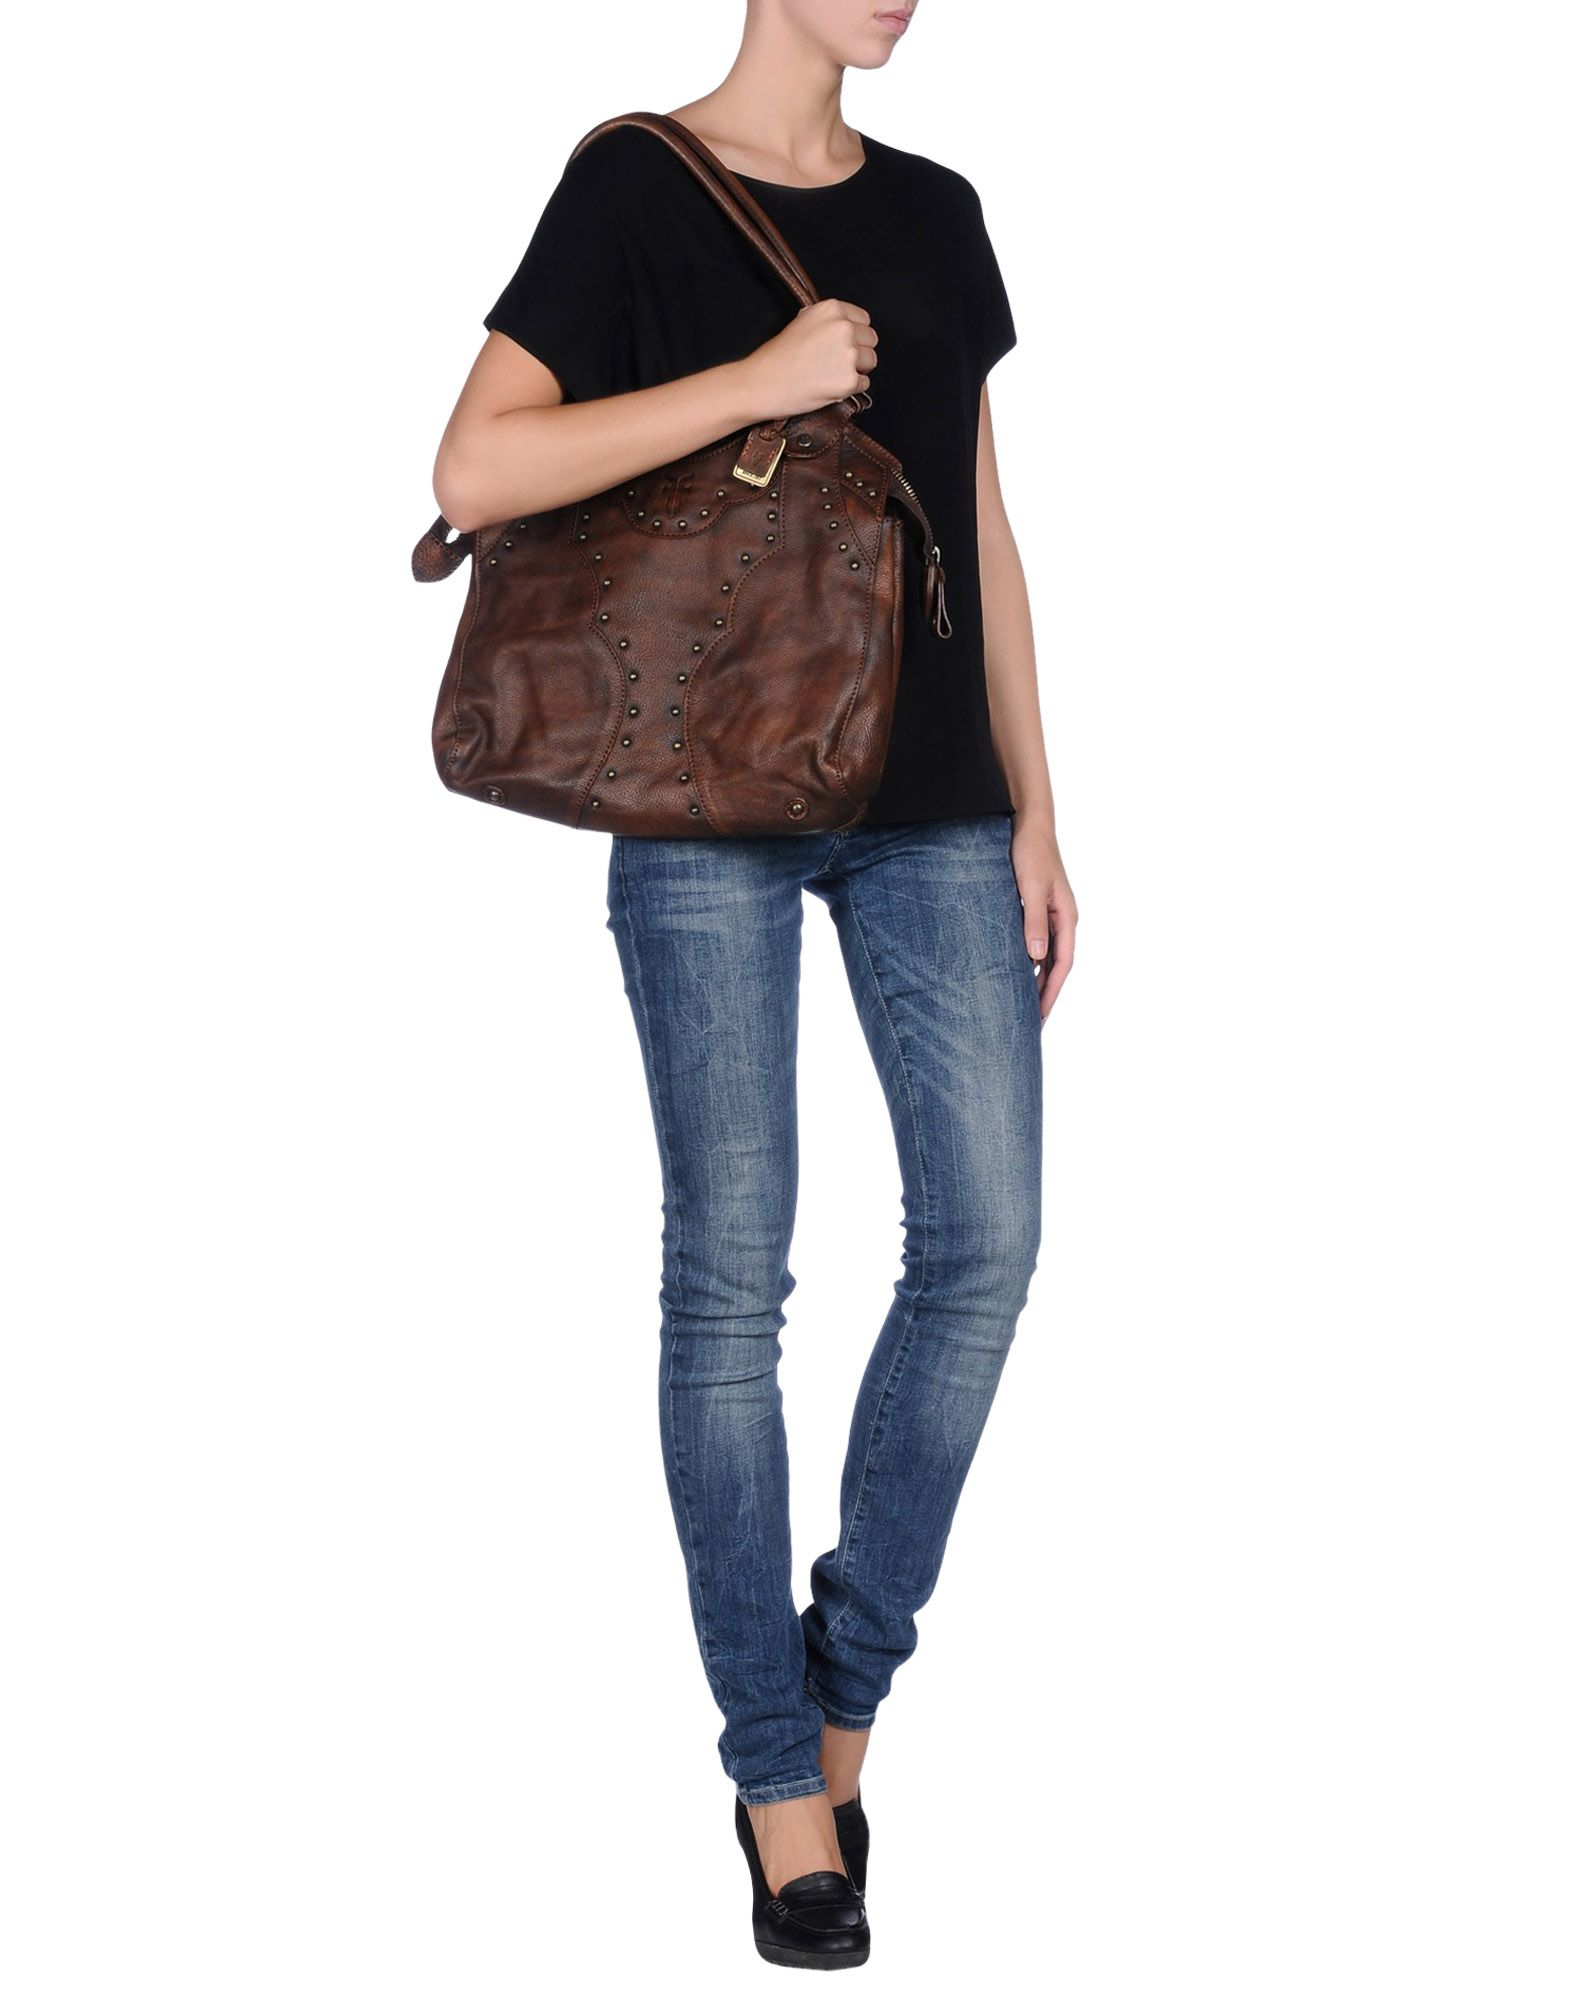 Frye Studded Leather Shoulder Bag in Dark Brown (Brown) - Lyst